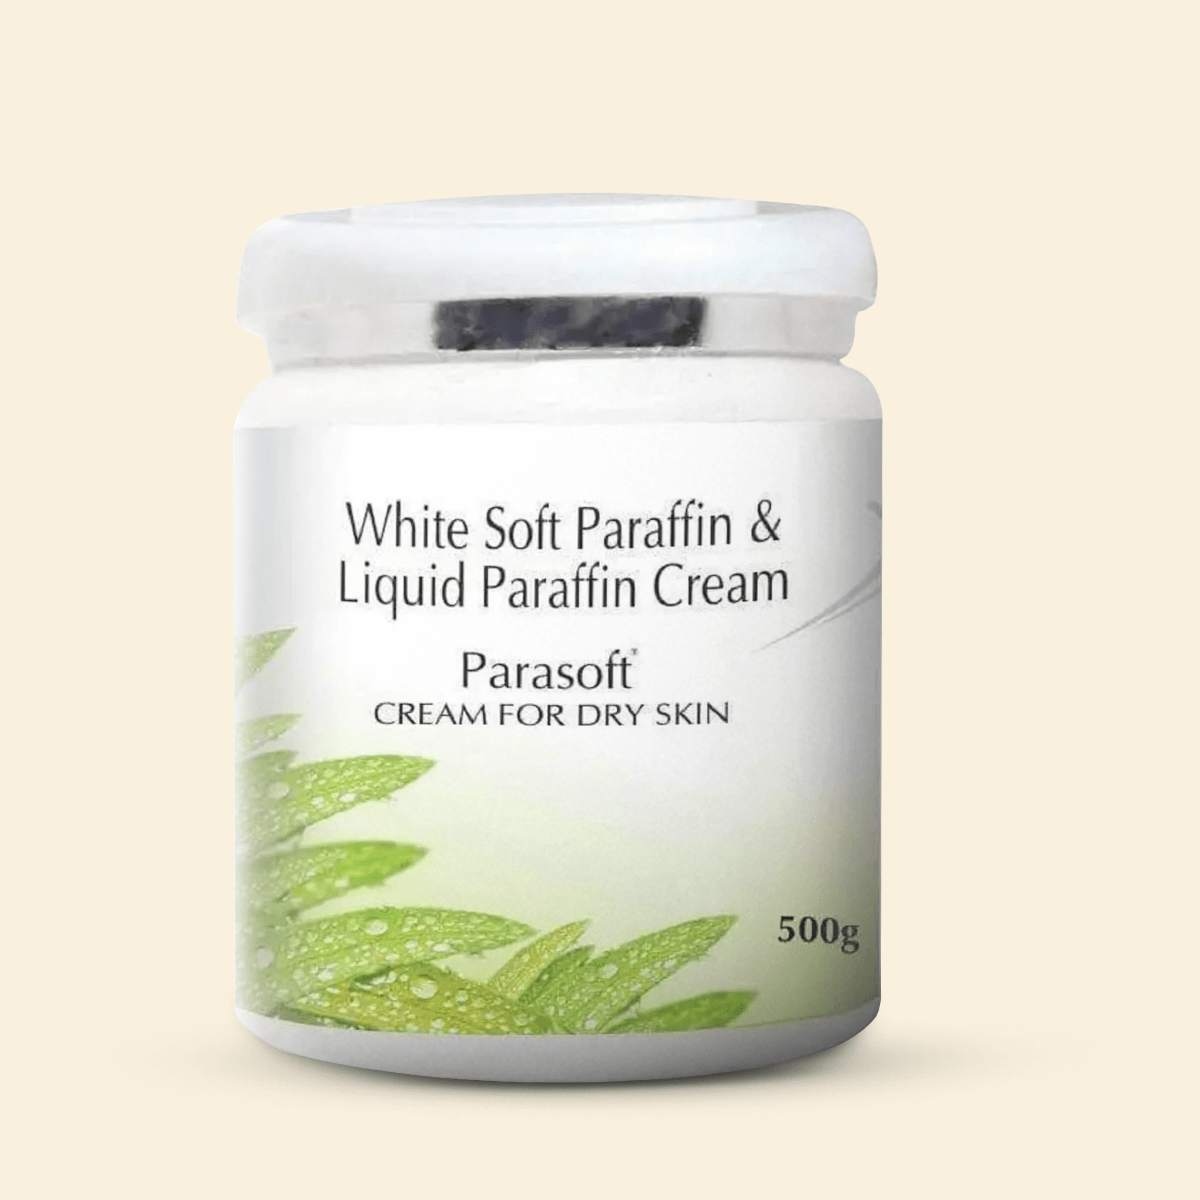  parasoft Cream for Dry Skin.